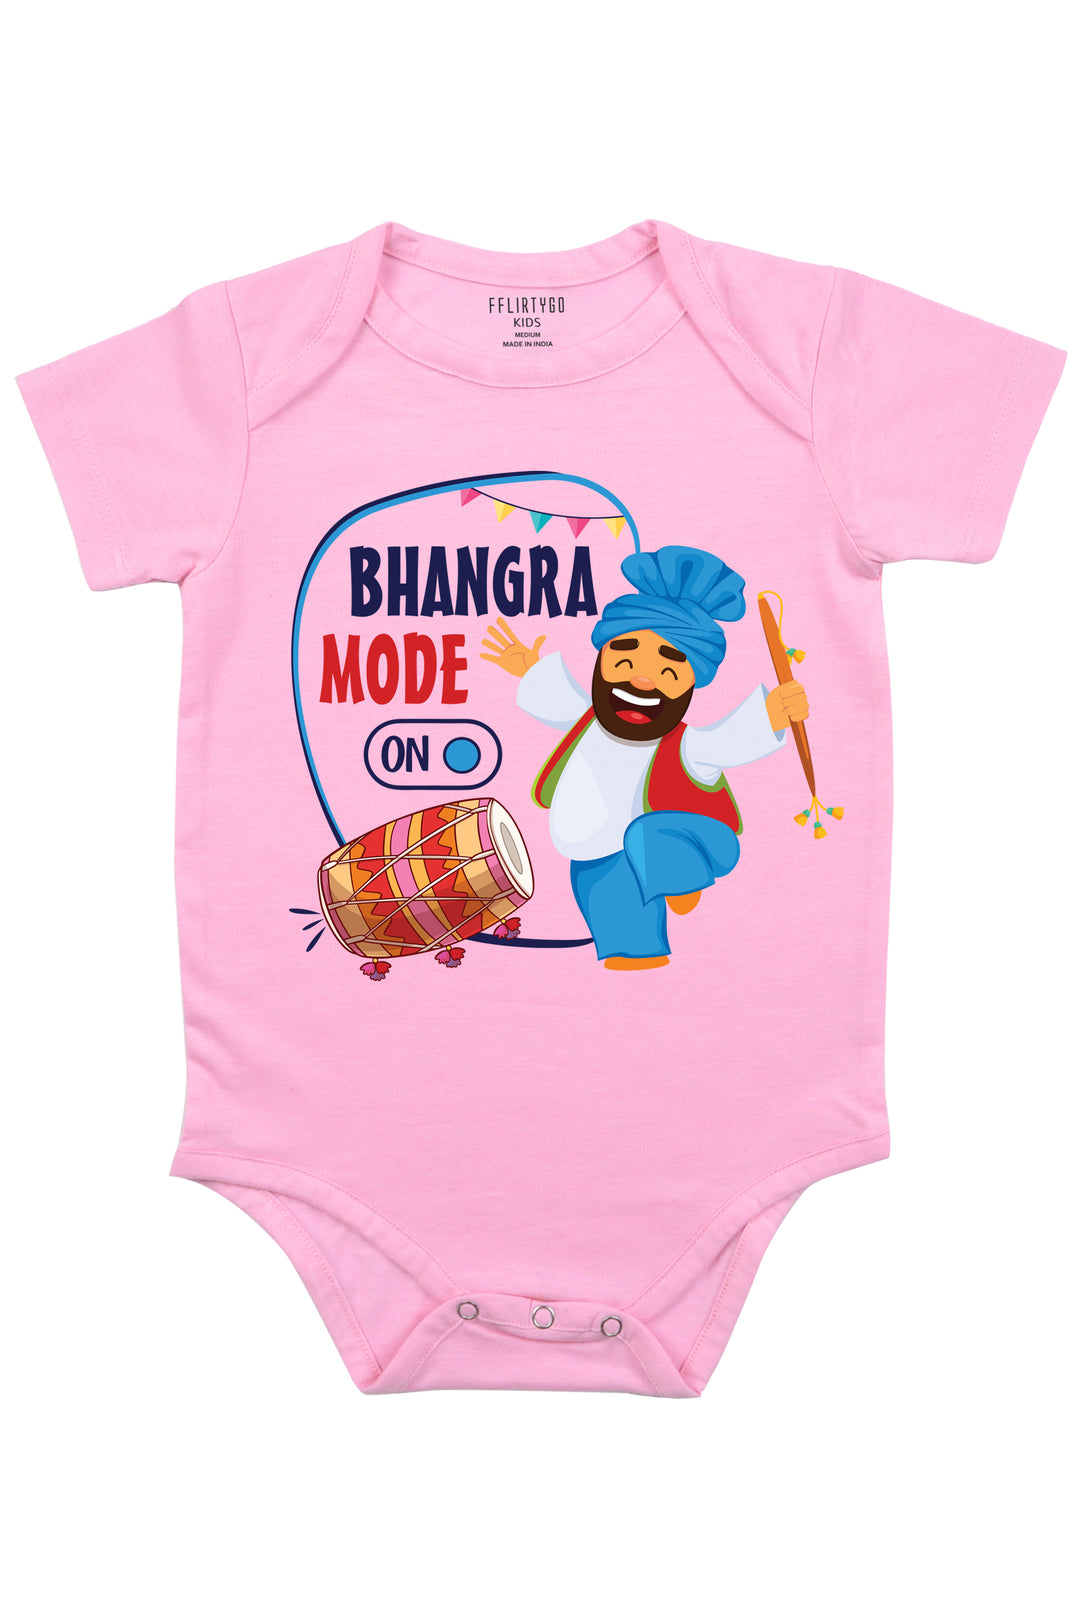 Bhangra Mode On